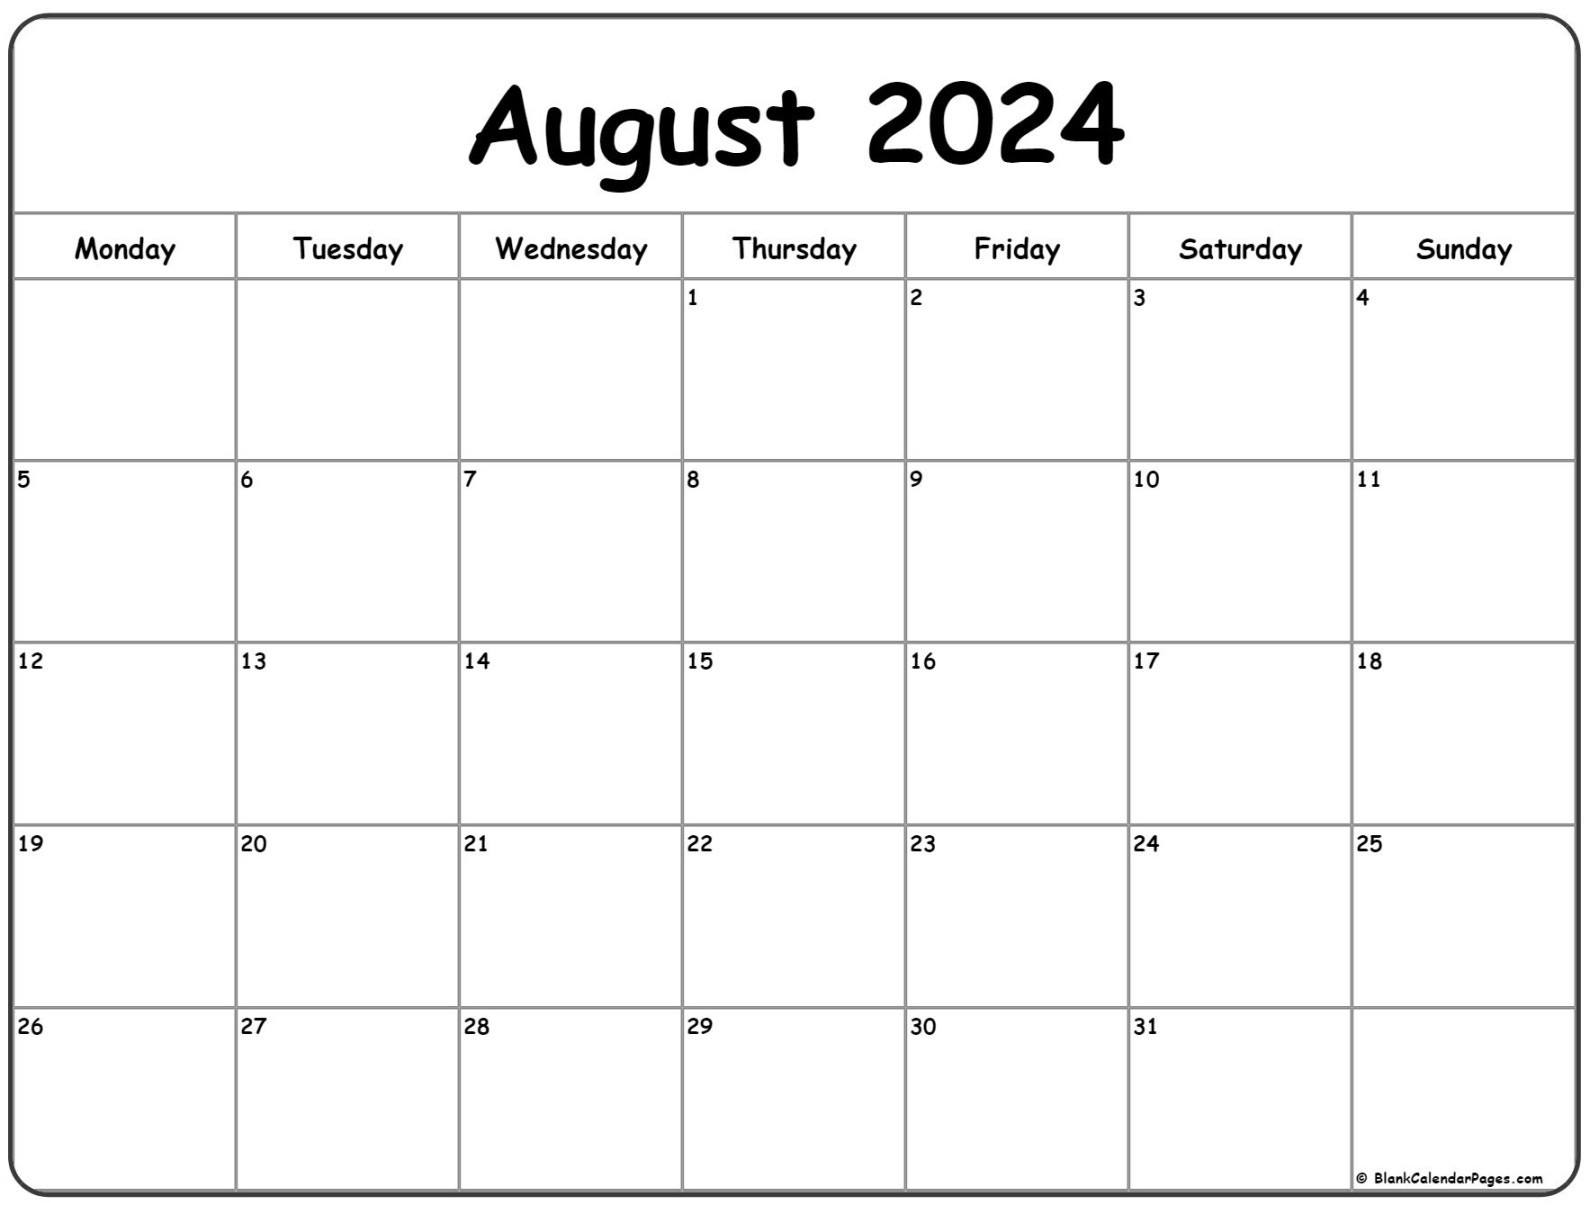 August 2024 Blank Calendar